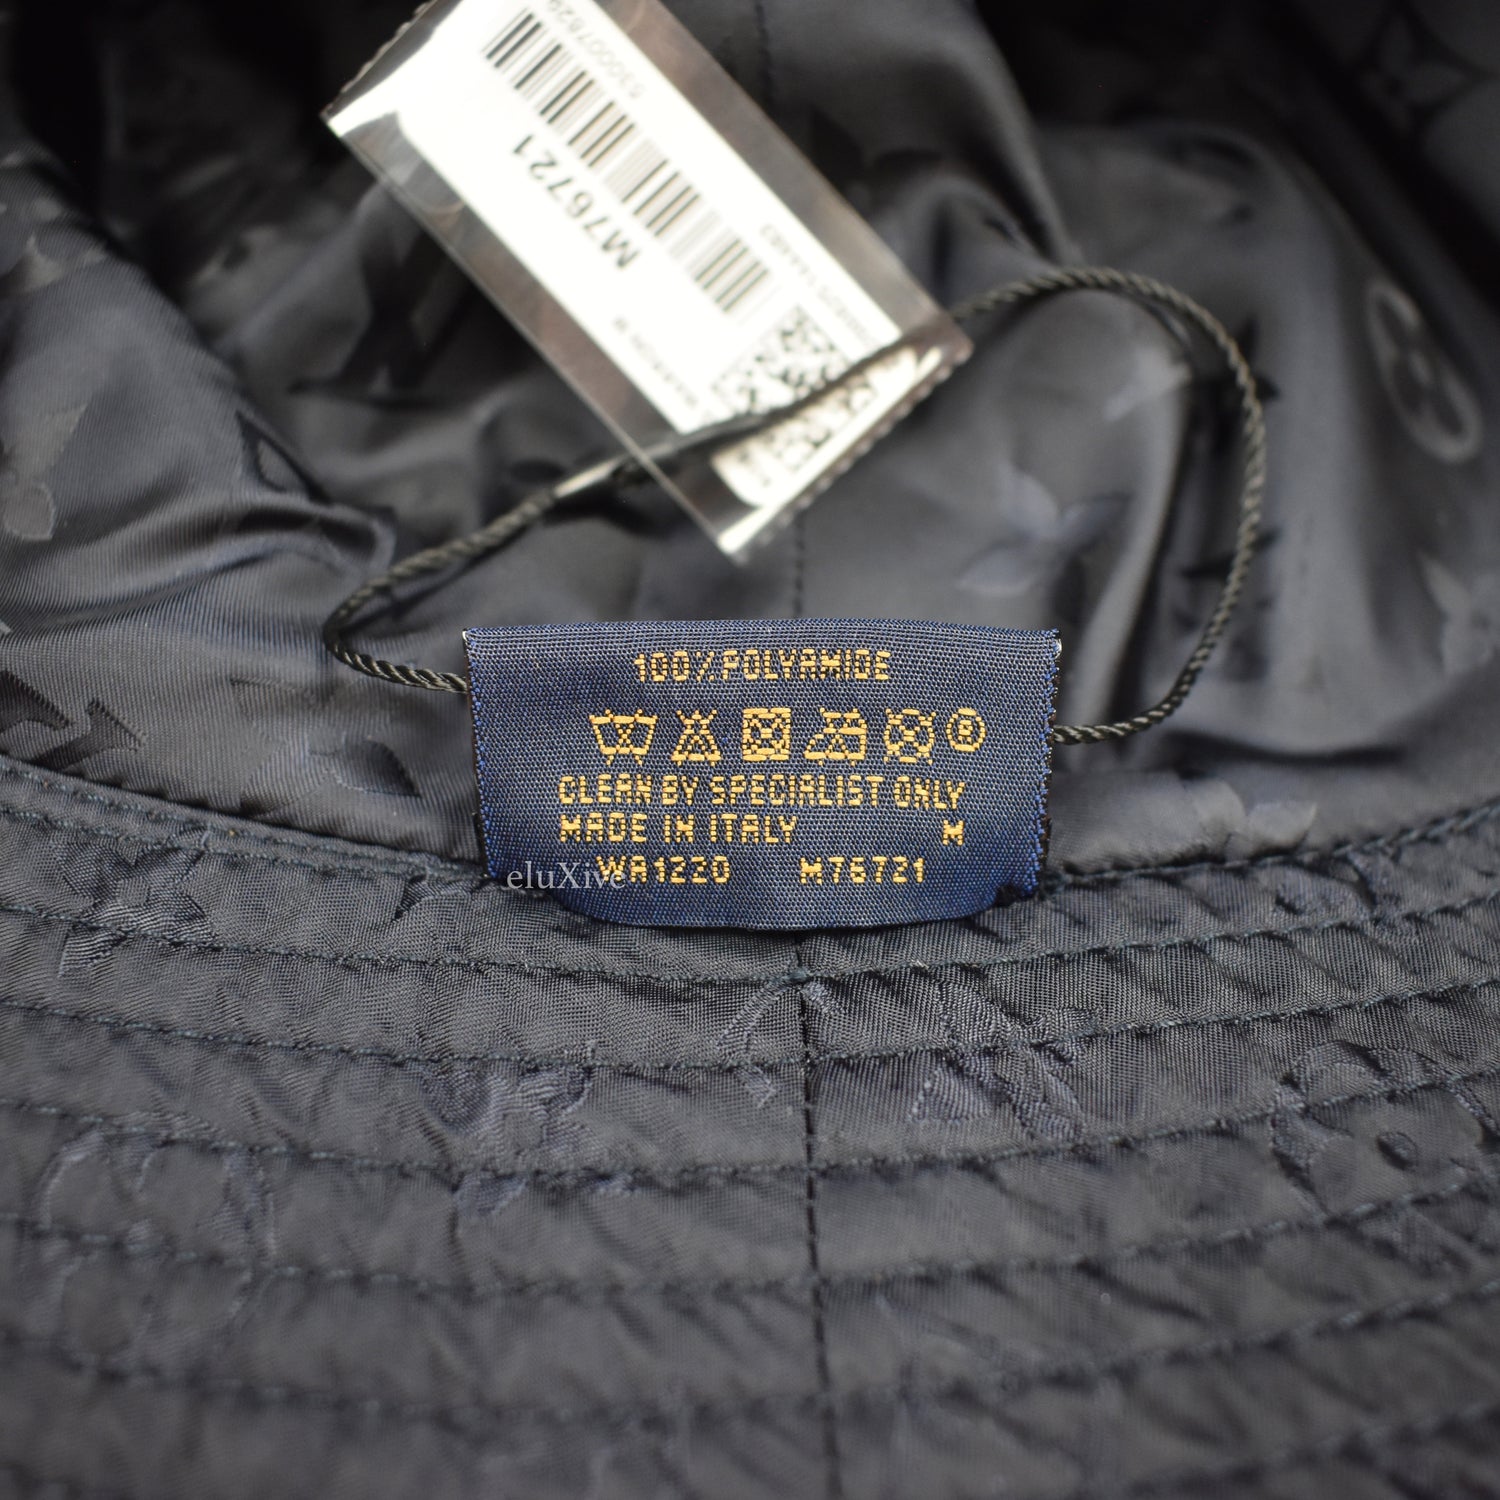 Louis Vuitton® Epi Mng Reversible Bucket Hat Dark Brown. Size M in